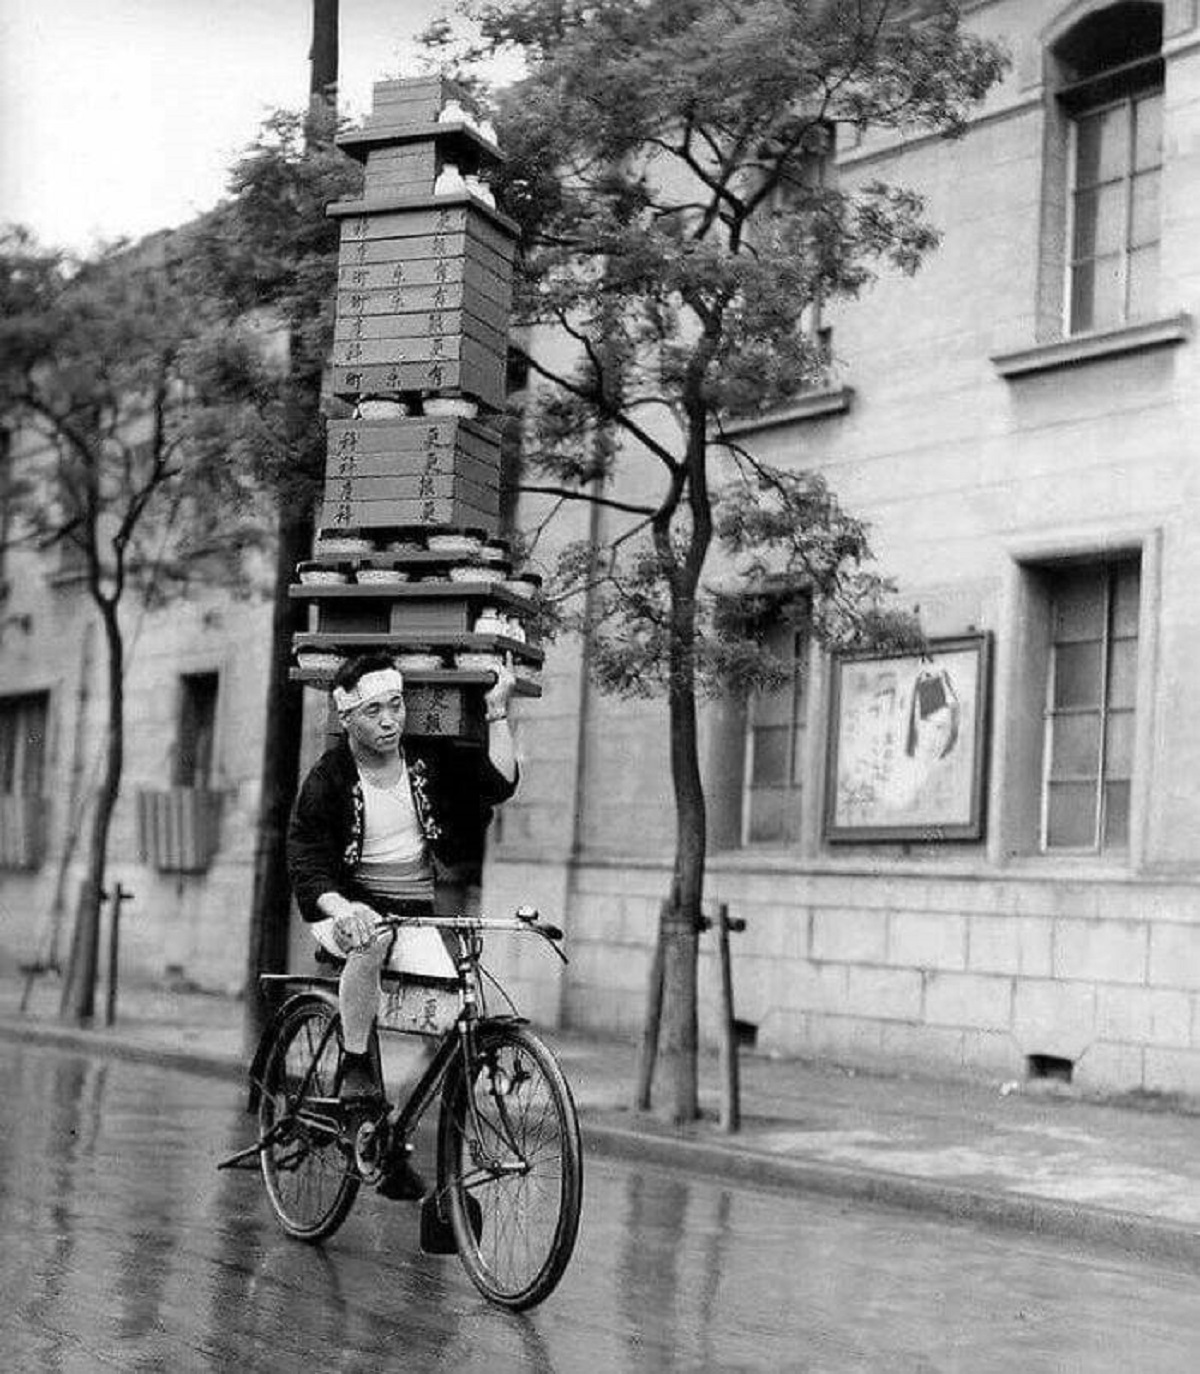 "(1935) A Noodle Delivery Boy In Tokyo"